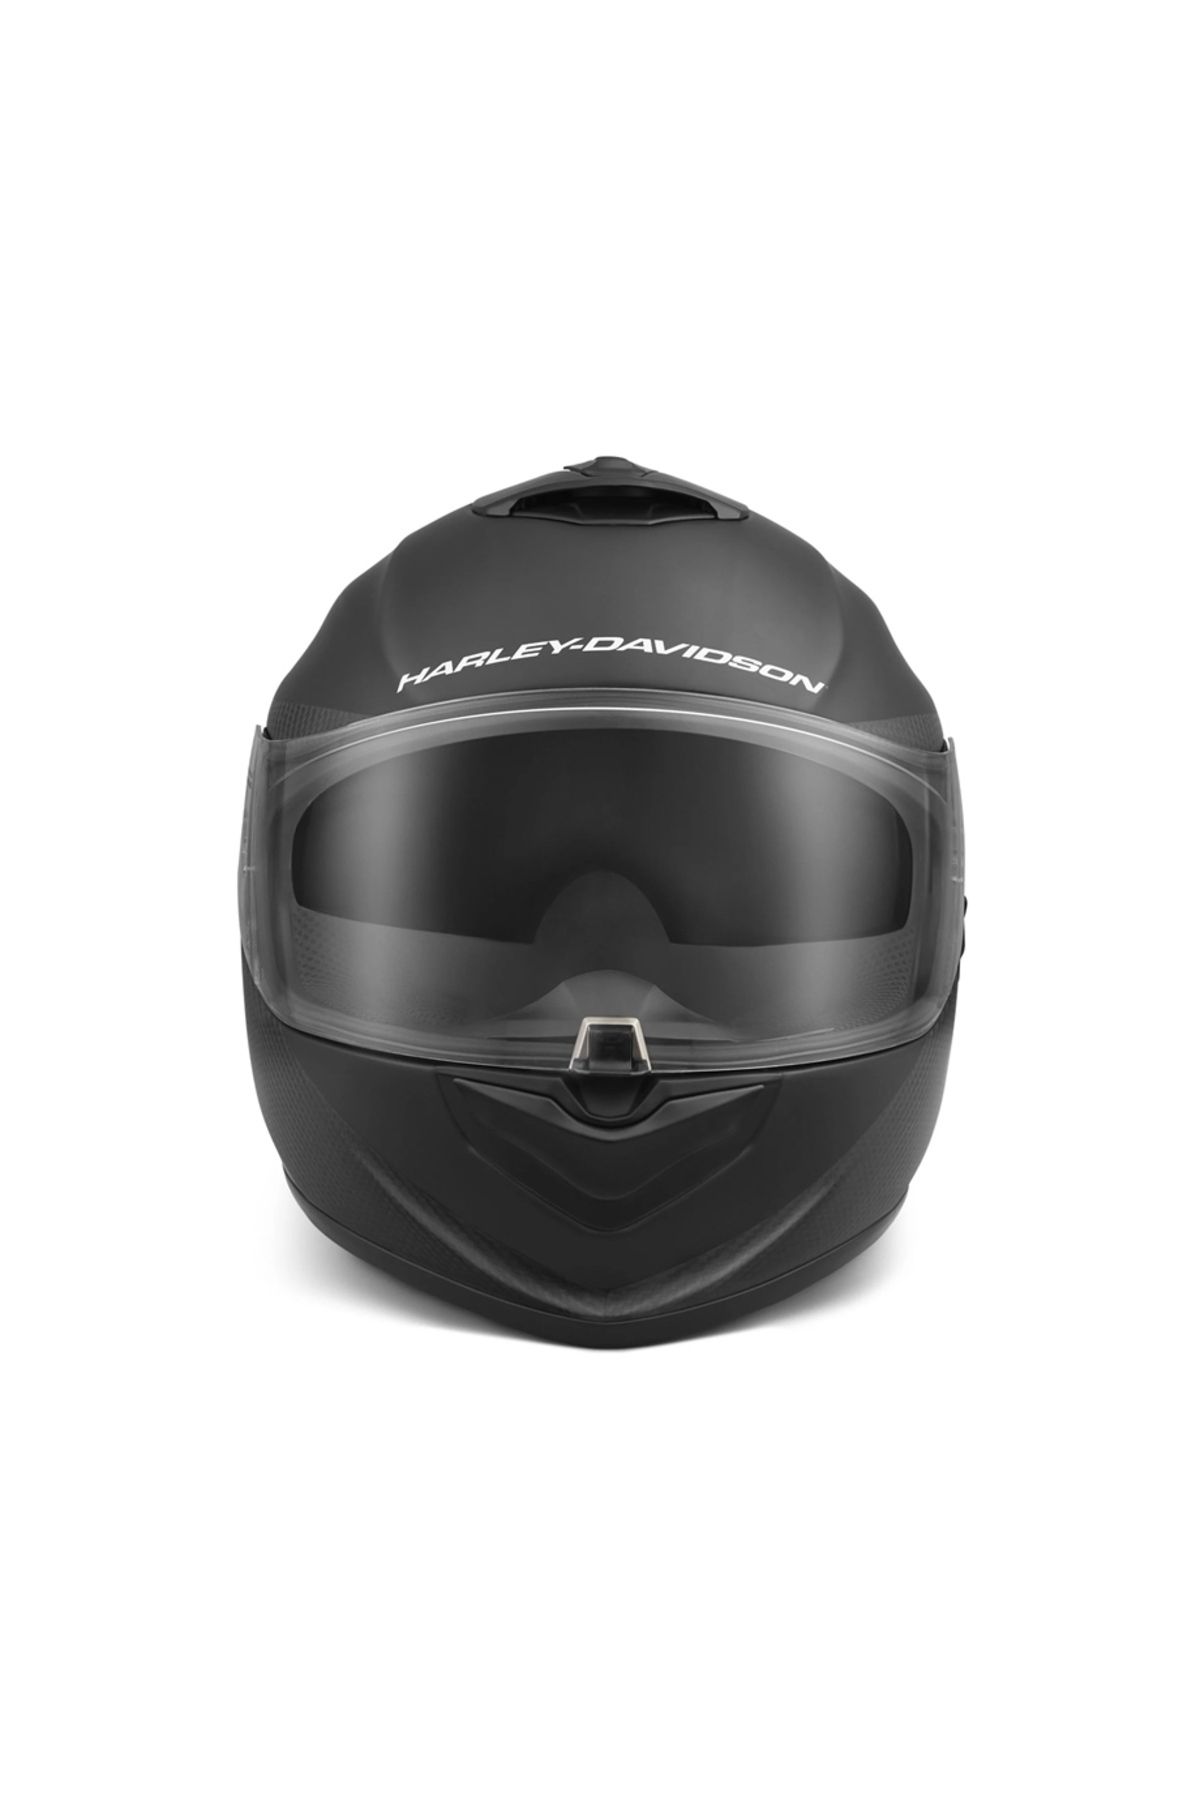 Harley Davidson Harley-davidson Men's H-d Brawler Carbon Fiber X09 Full Face With Sun Shield Helmet